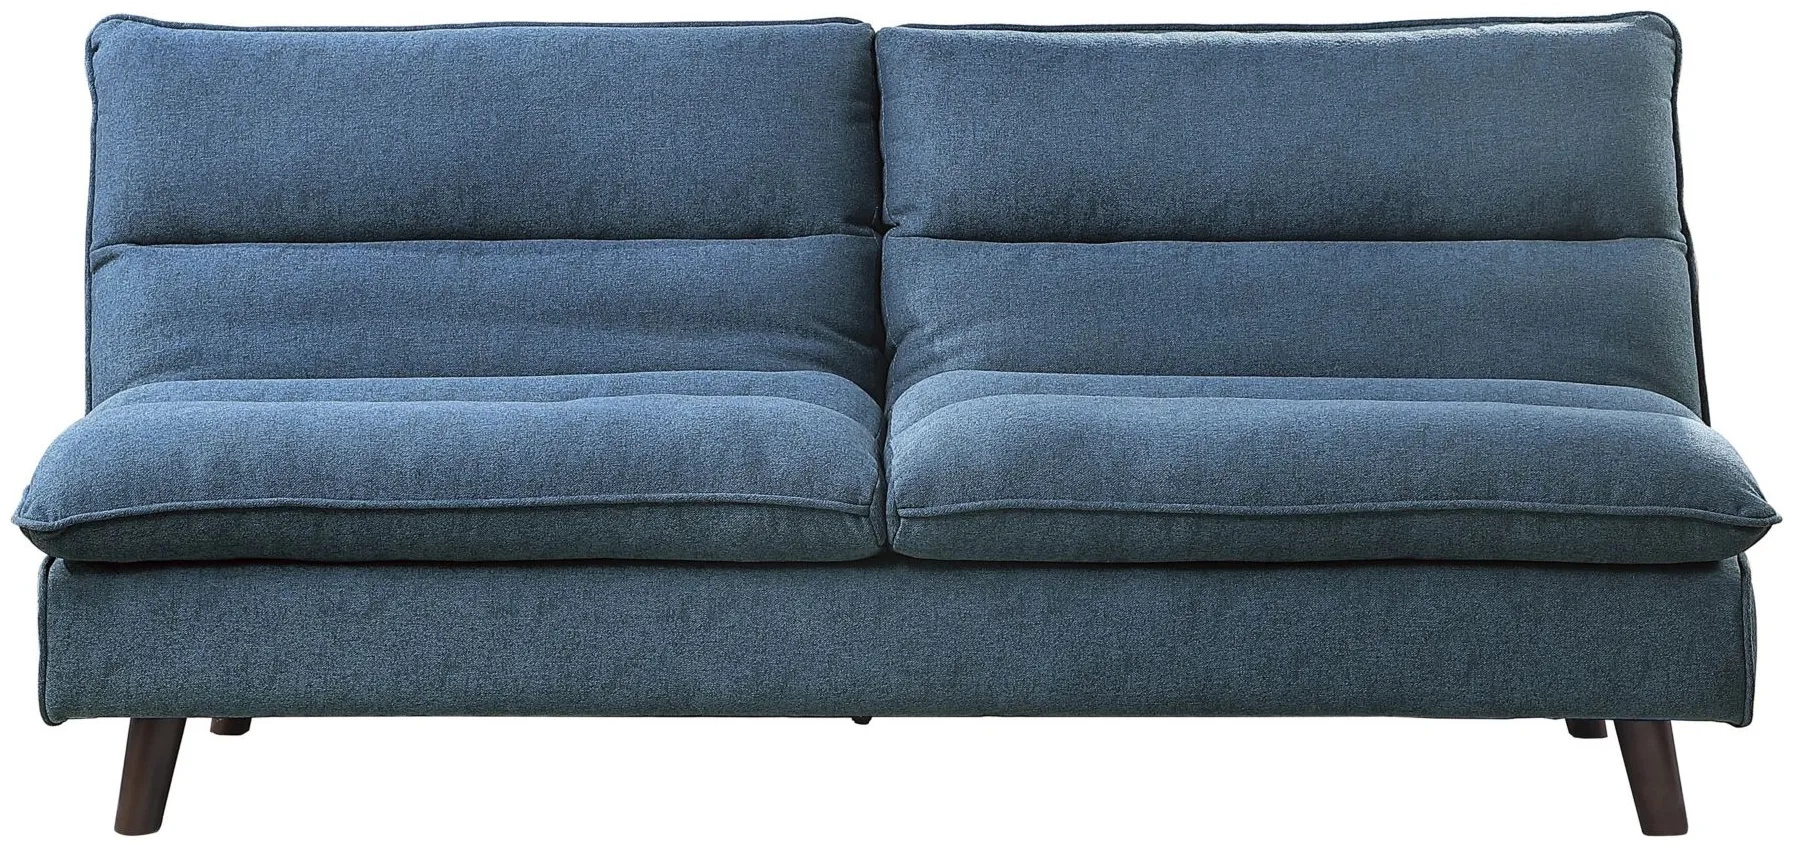 Croydon Klick Klak Sofa in Blue by Homelegance